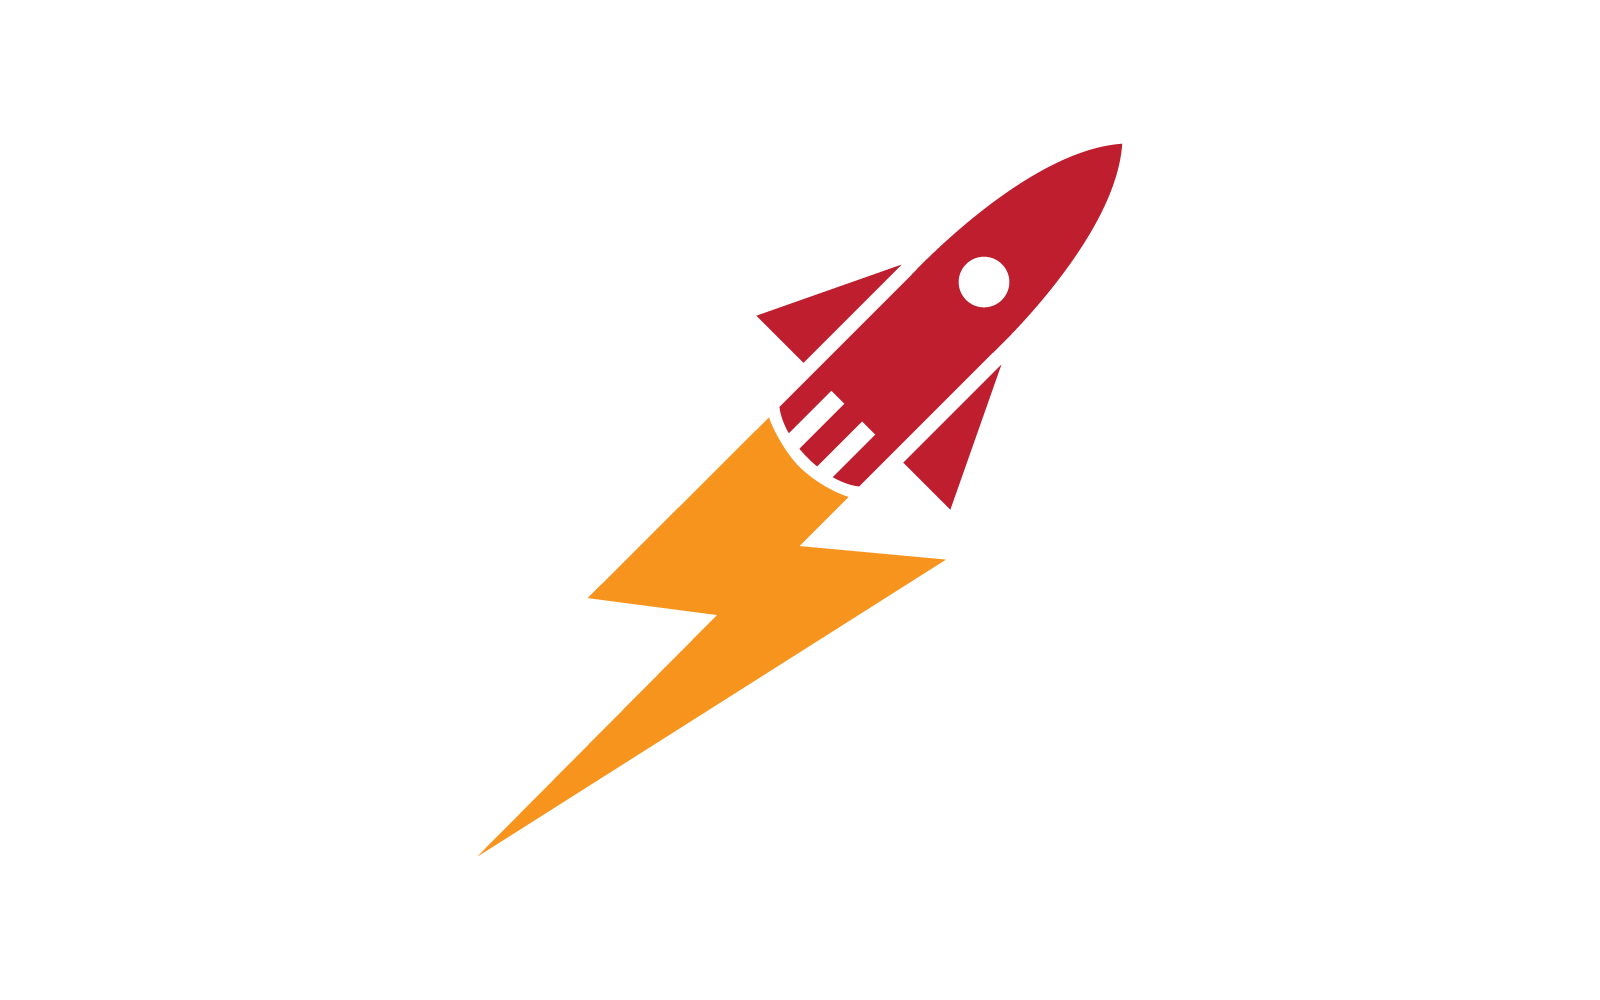 Rocket ilustration logo vector icon template eps 10